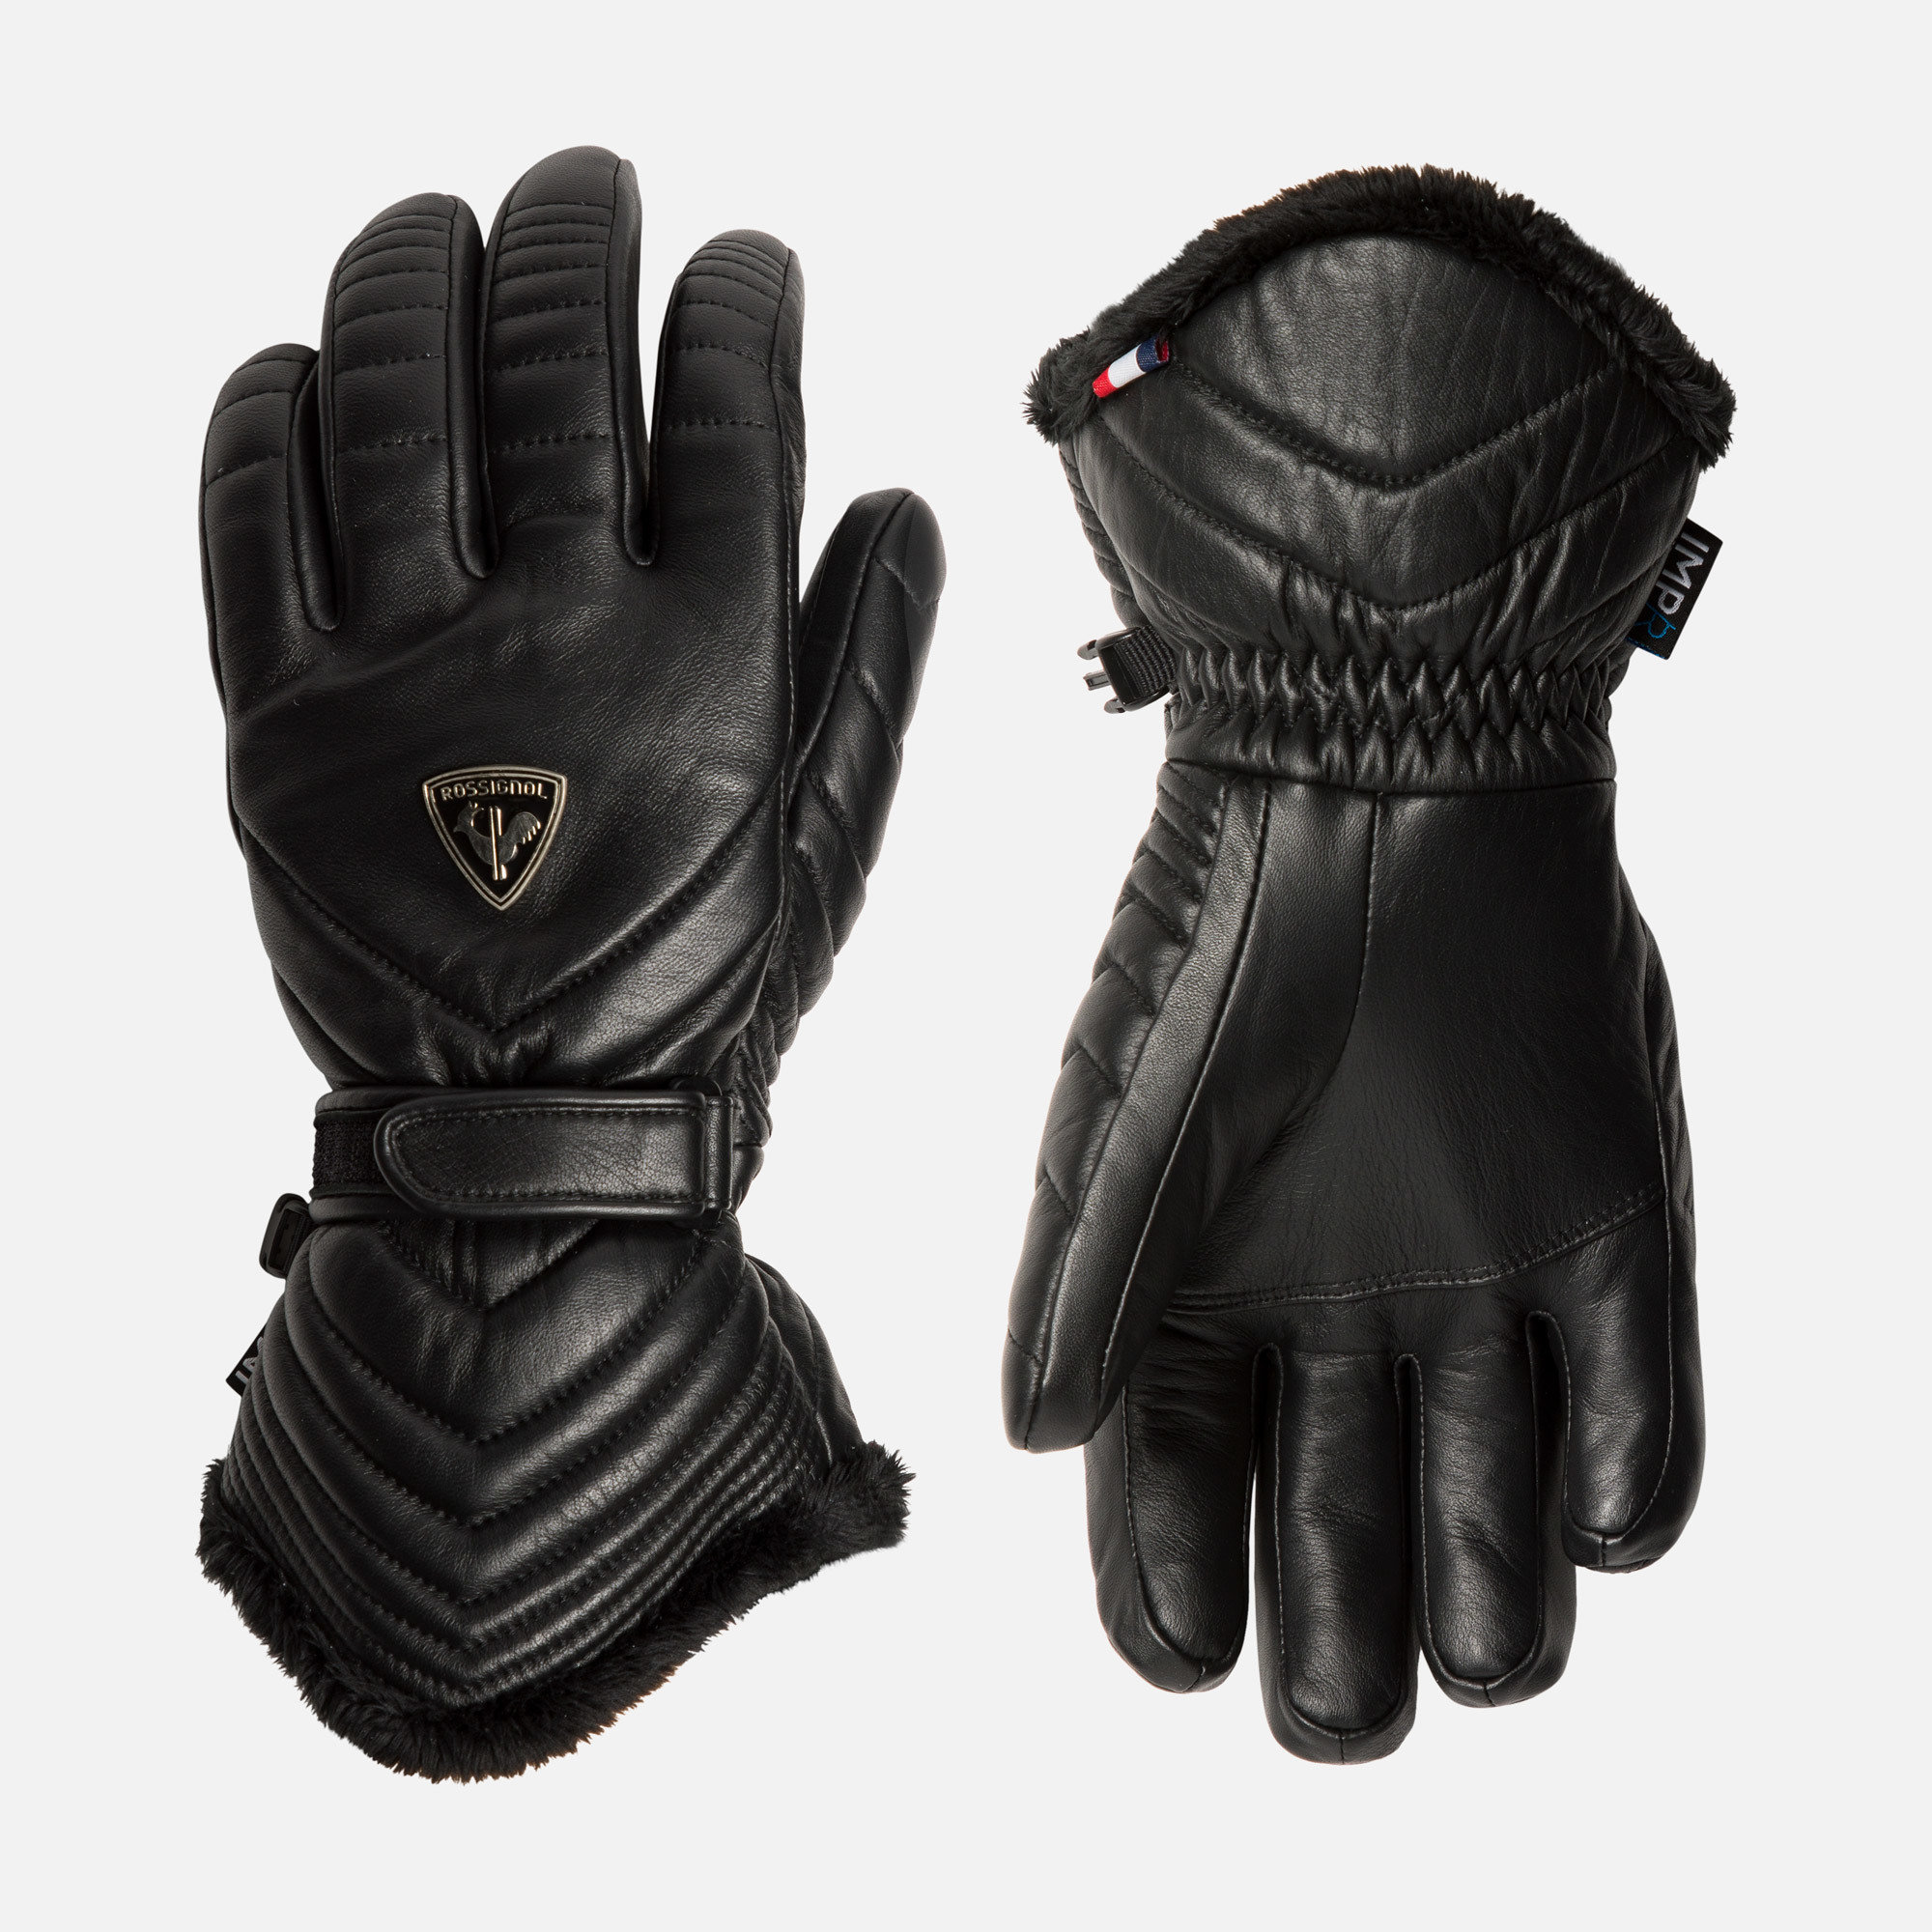 Women's Select leather waterproof ski gloves